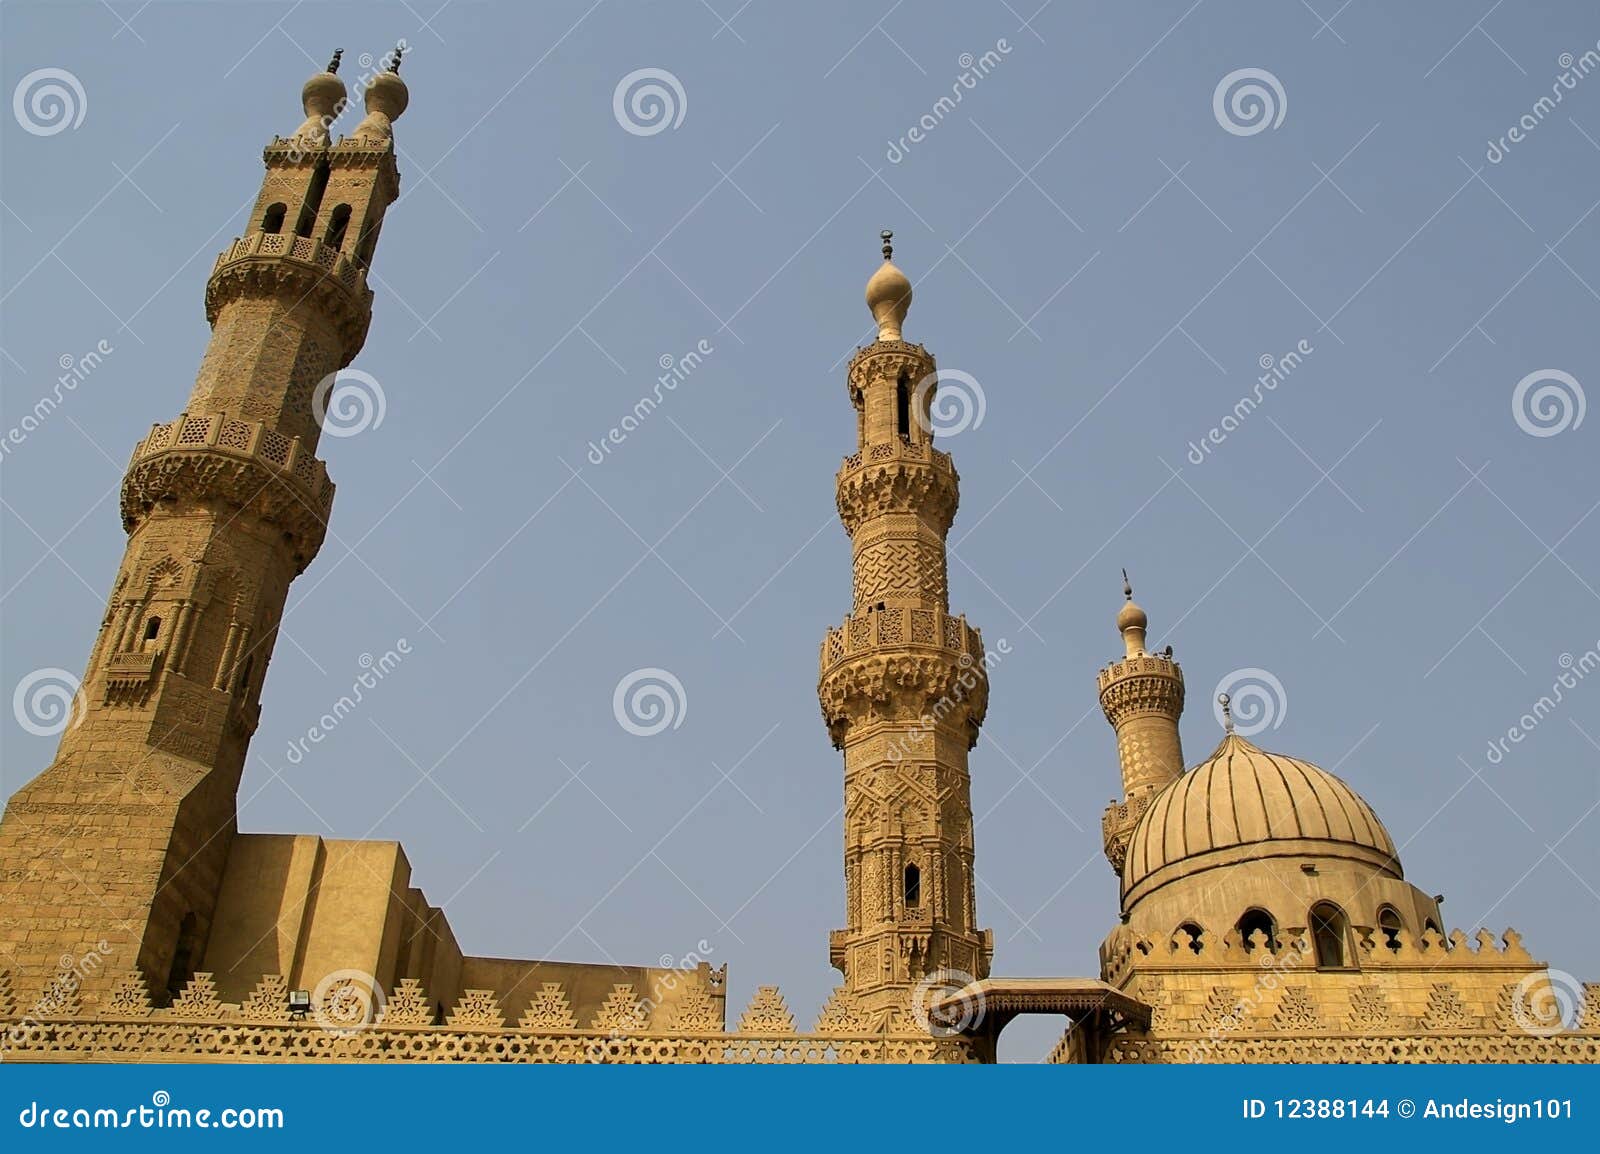 al azhar mosque in cairo